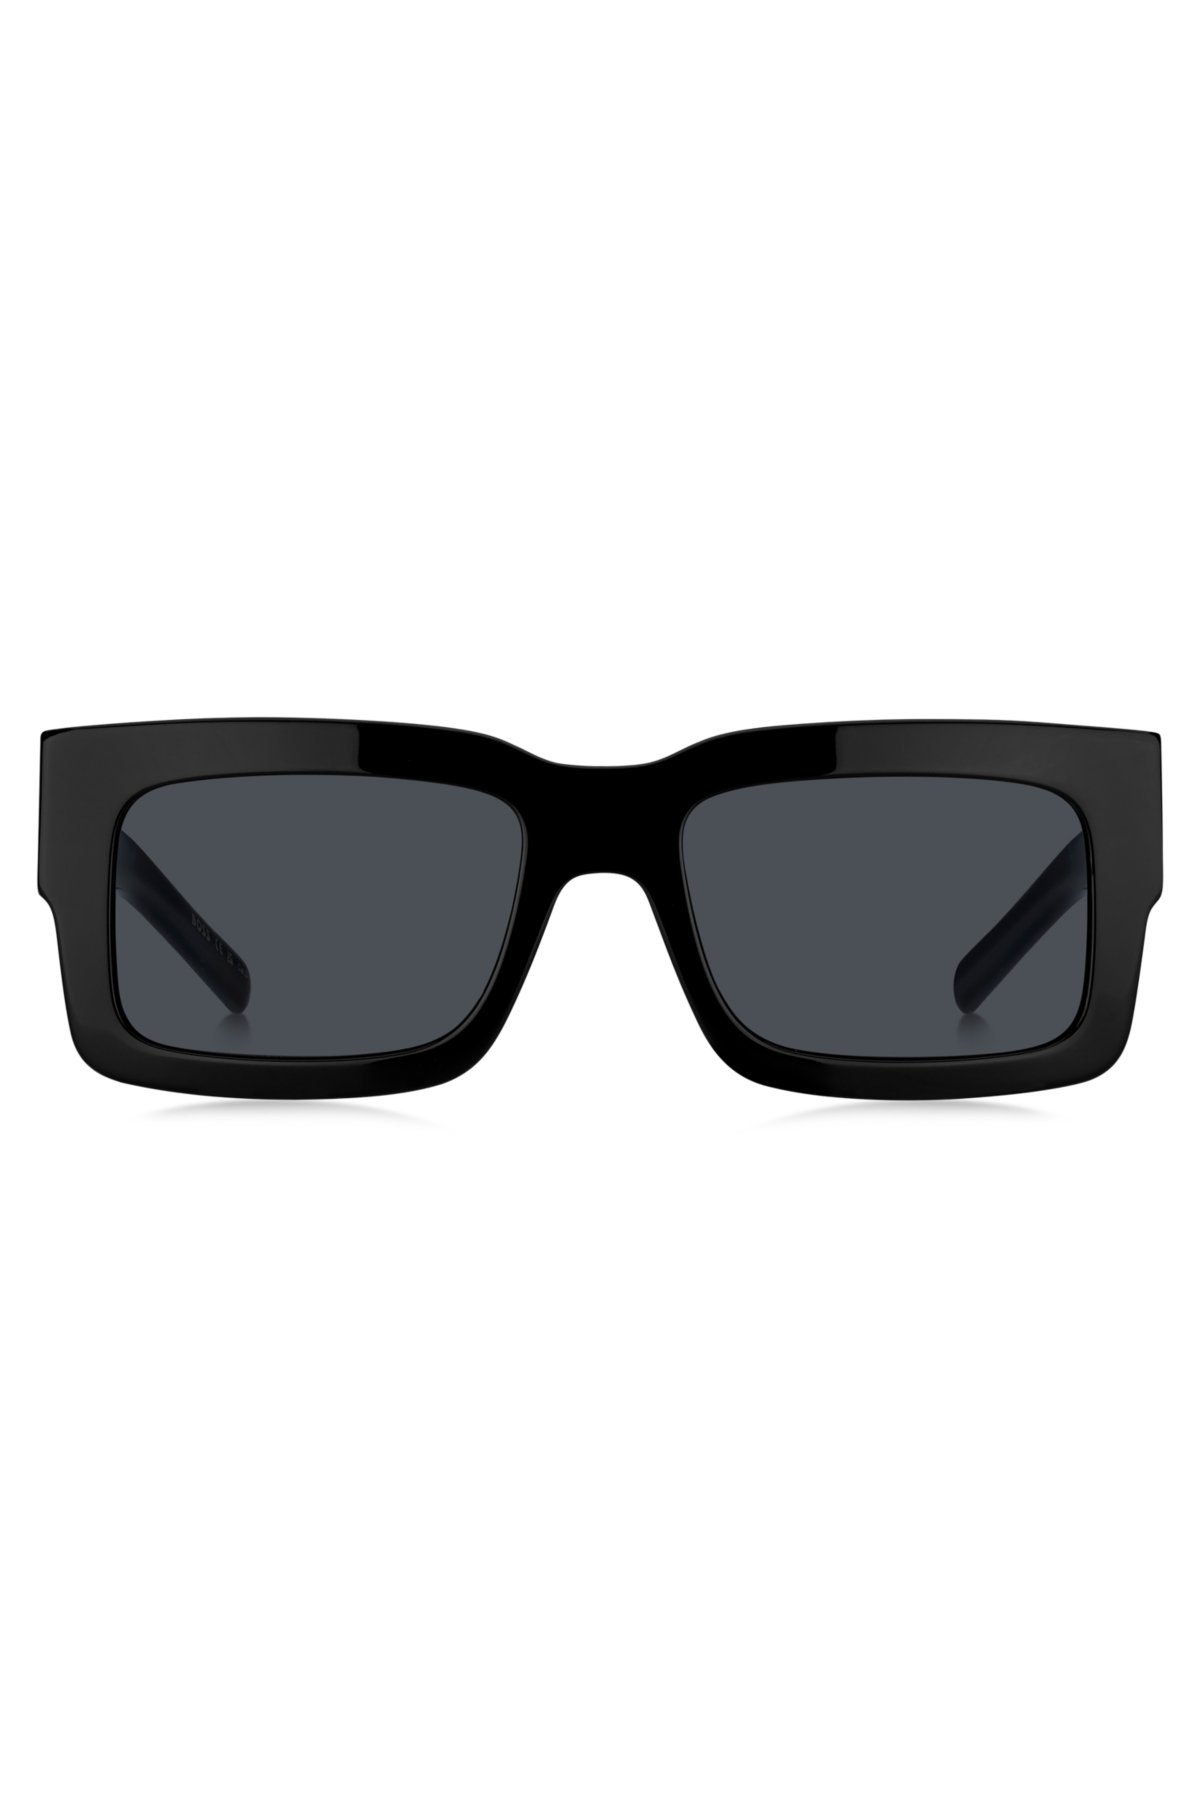 Black-acetate sunglasses with Double B monogram, Black